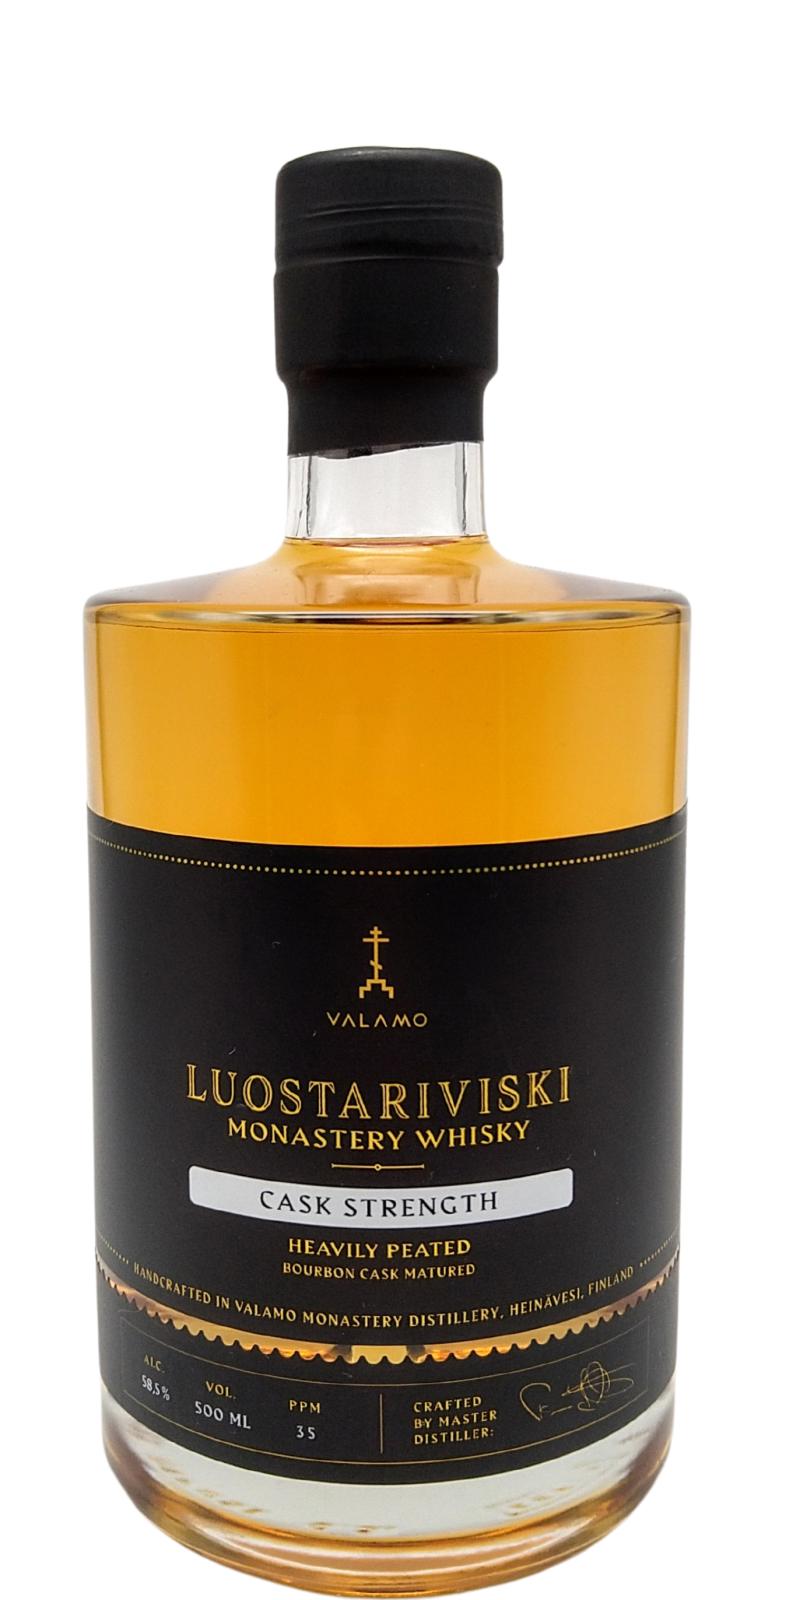 Valamo Luostariviski Monastery Whisky Cask Strength Heavily Peated PPM 35 Bourbon 58.5% 500ml